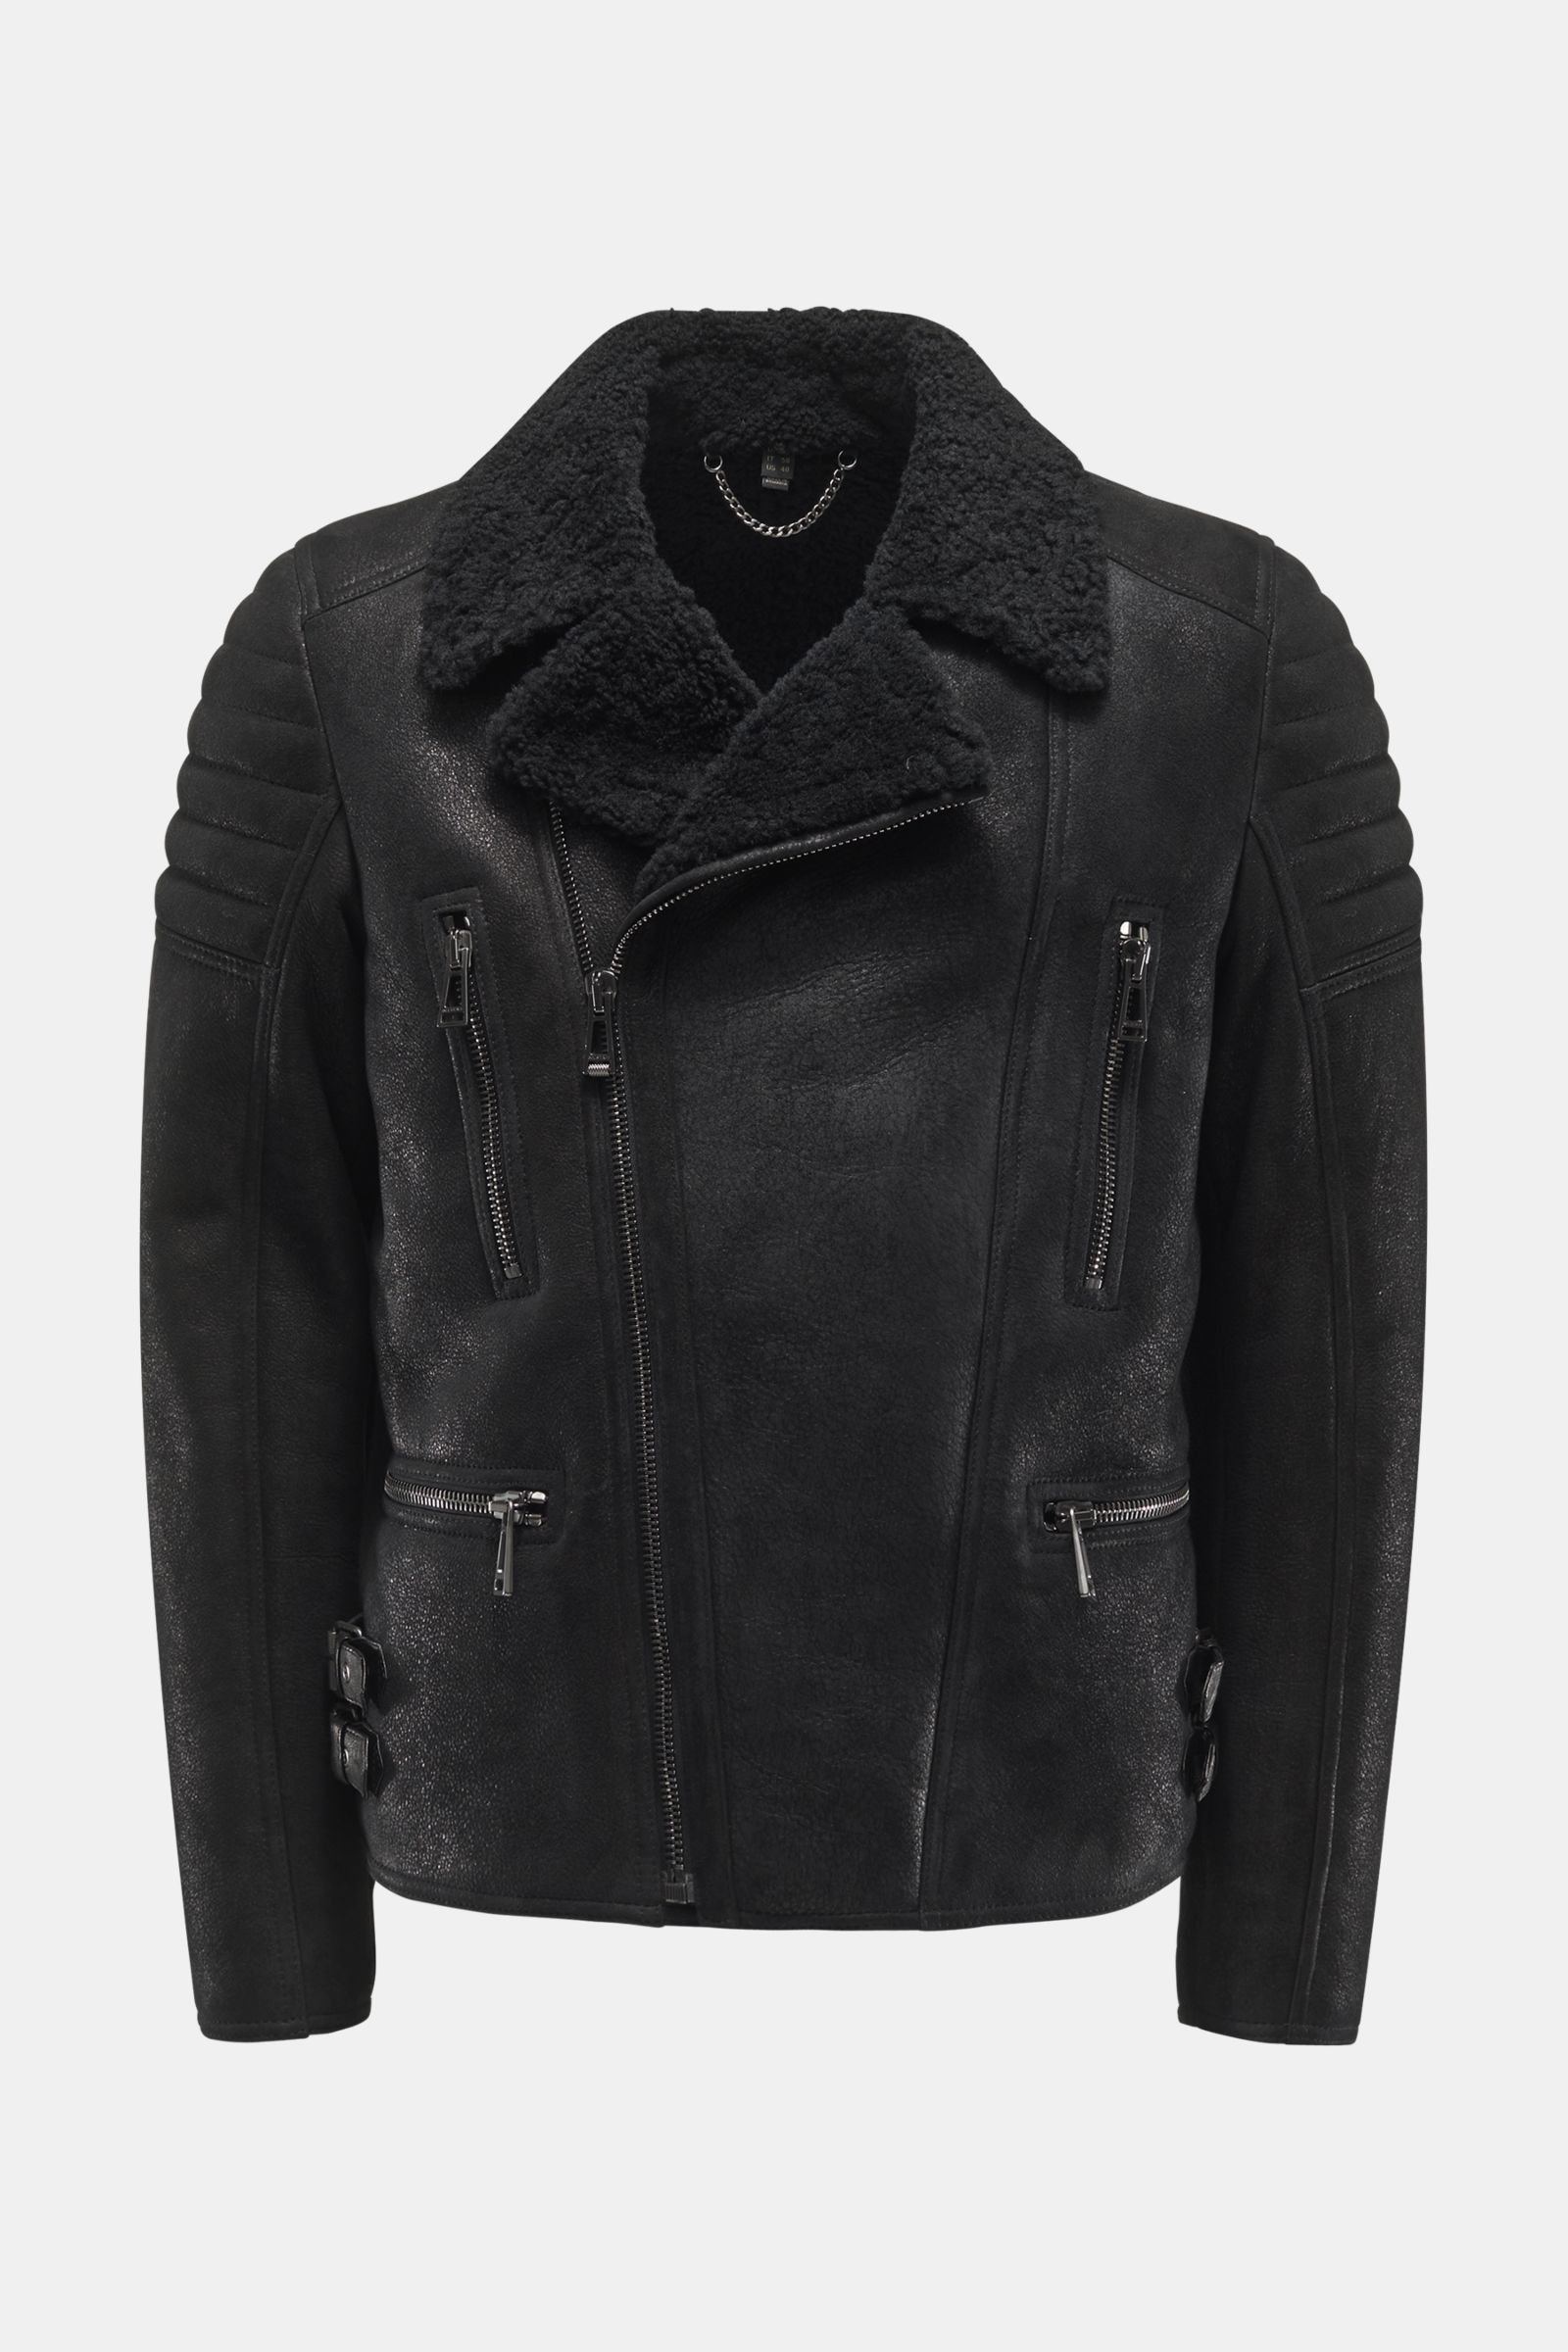 BELSTAFF shearling jacket 'Fraser' black | BRAUN Hamburg